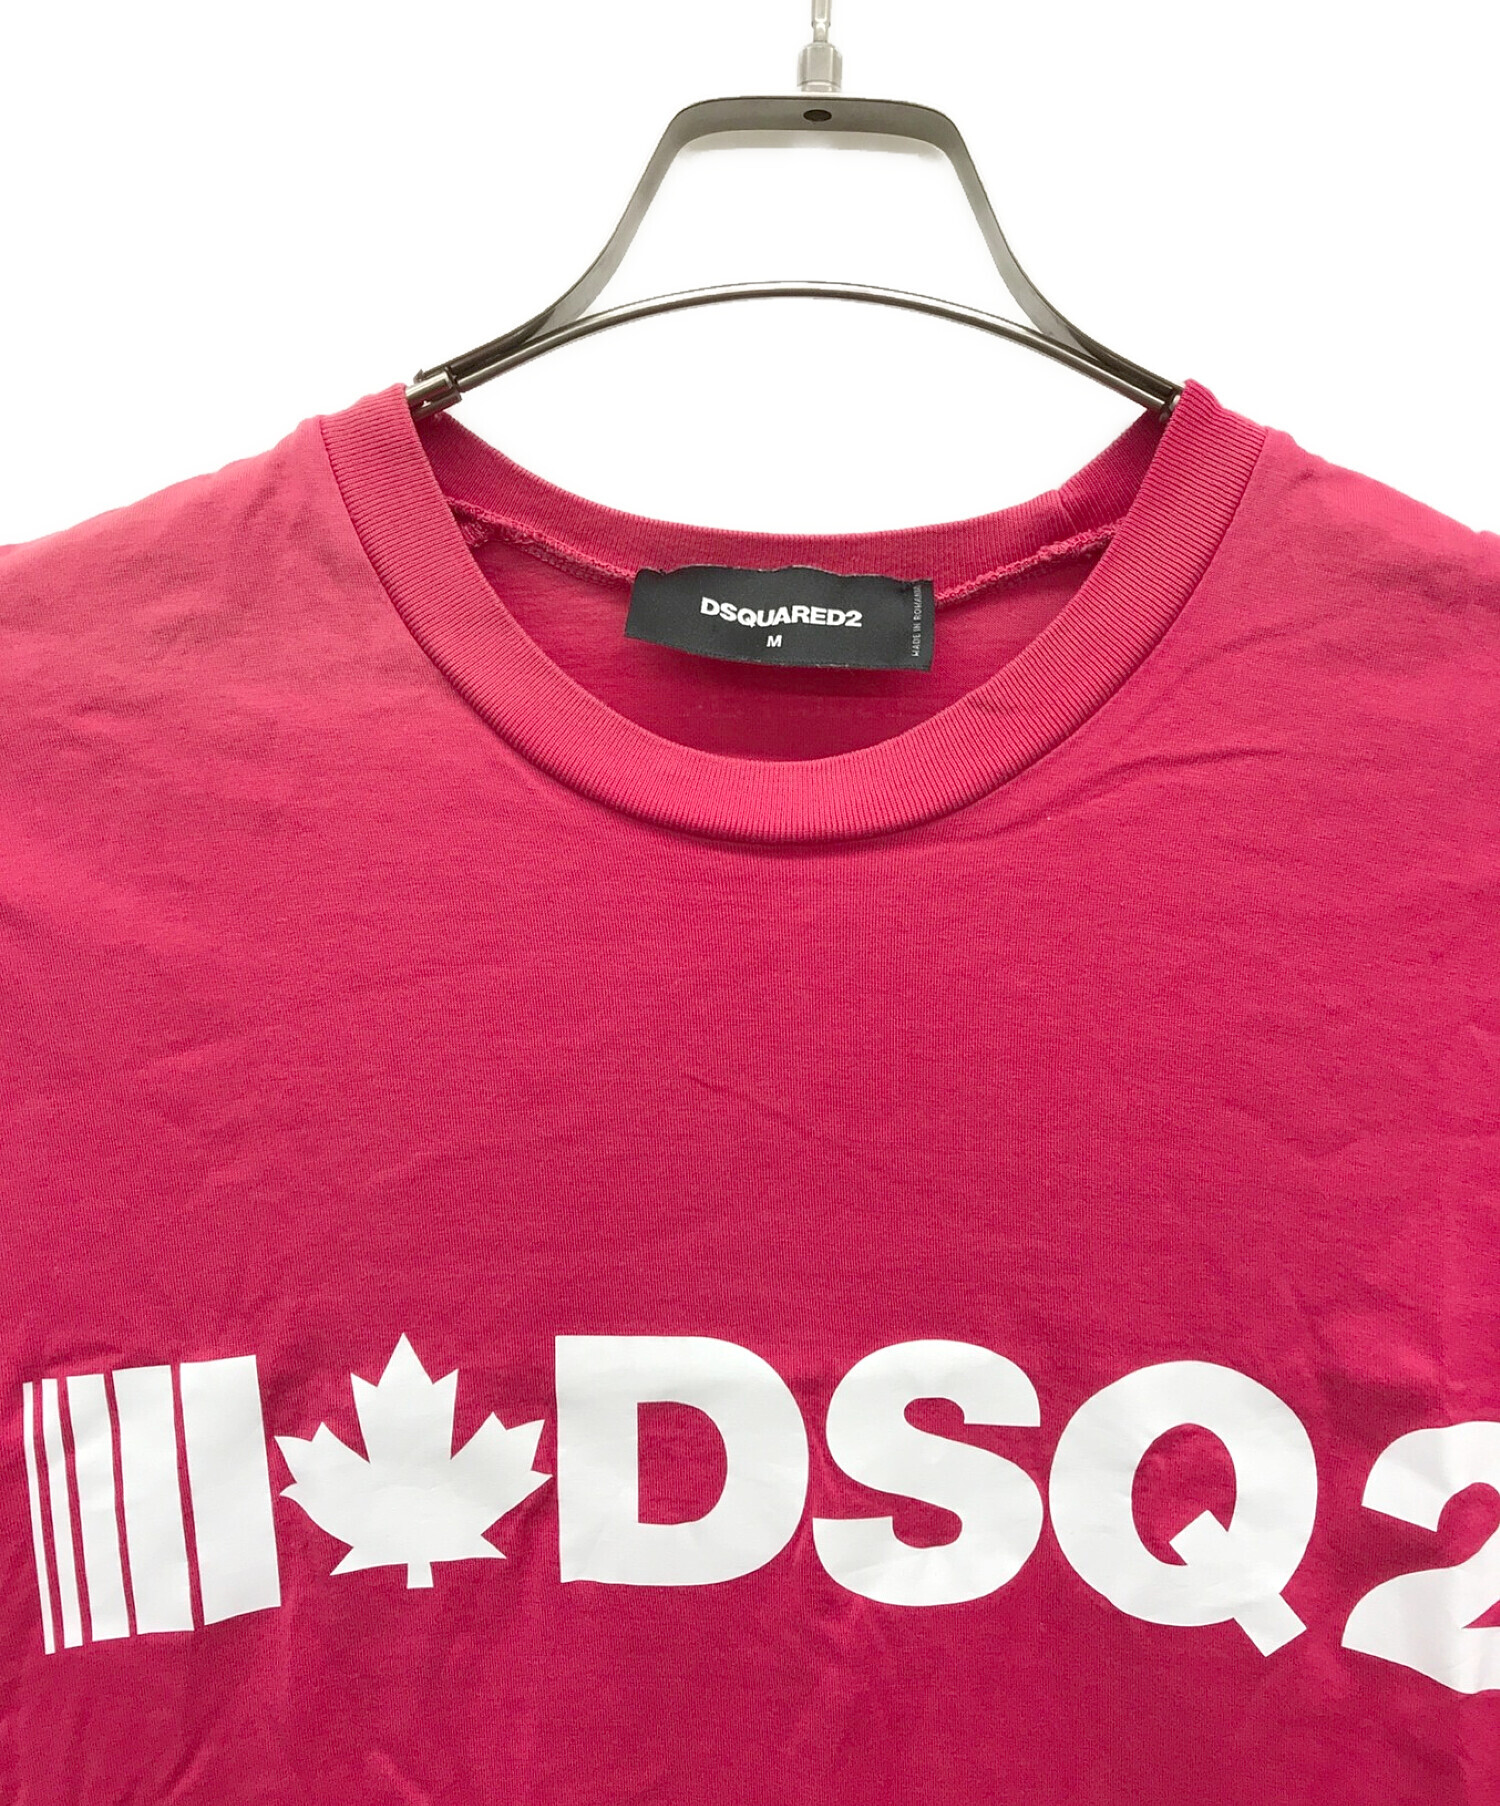 DSQUARED2 (ディースクエアード) ロゴプリントTシャツ ピンク サイズ:M 175/92A